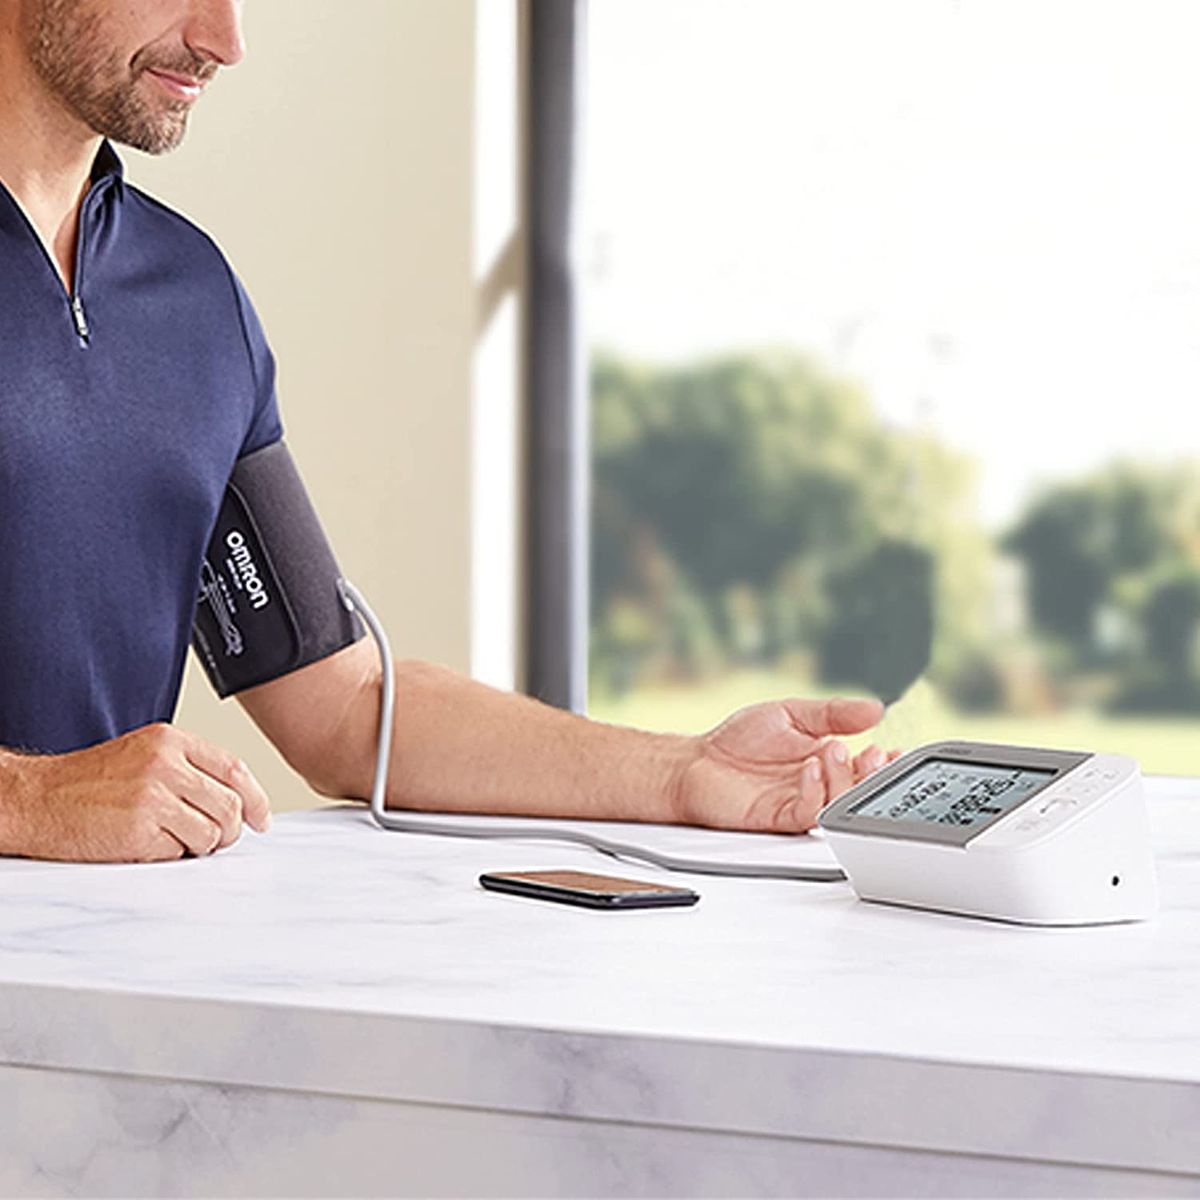 Omron X7 Smart Blood Pressure Monitor - Smart Blood Pressure Monitor with AFib Detection and Bluetooth - Smartphone Compatible